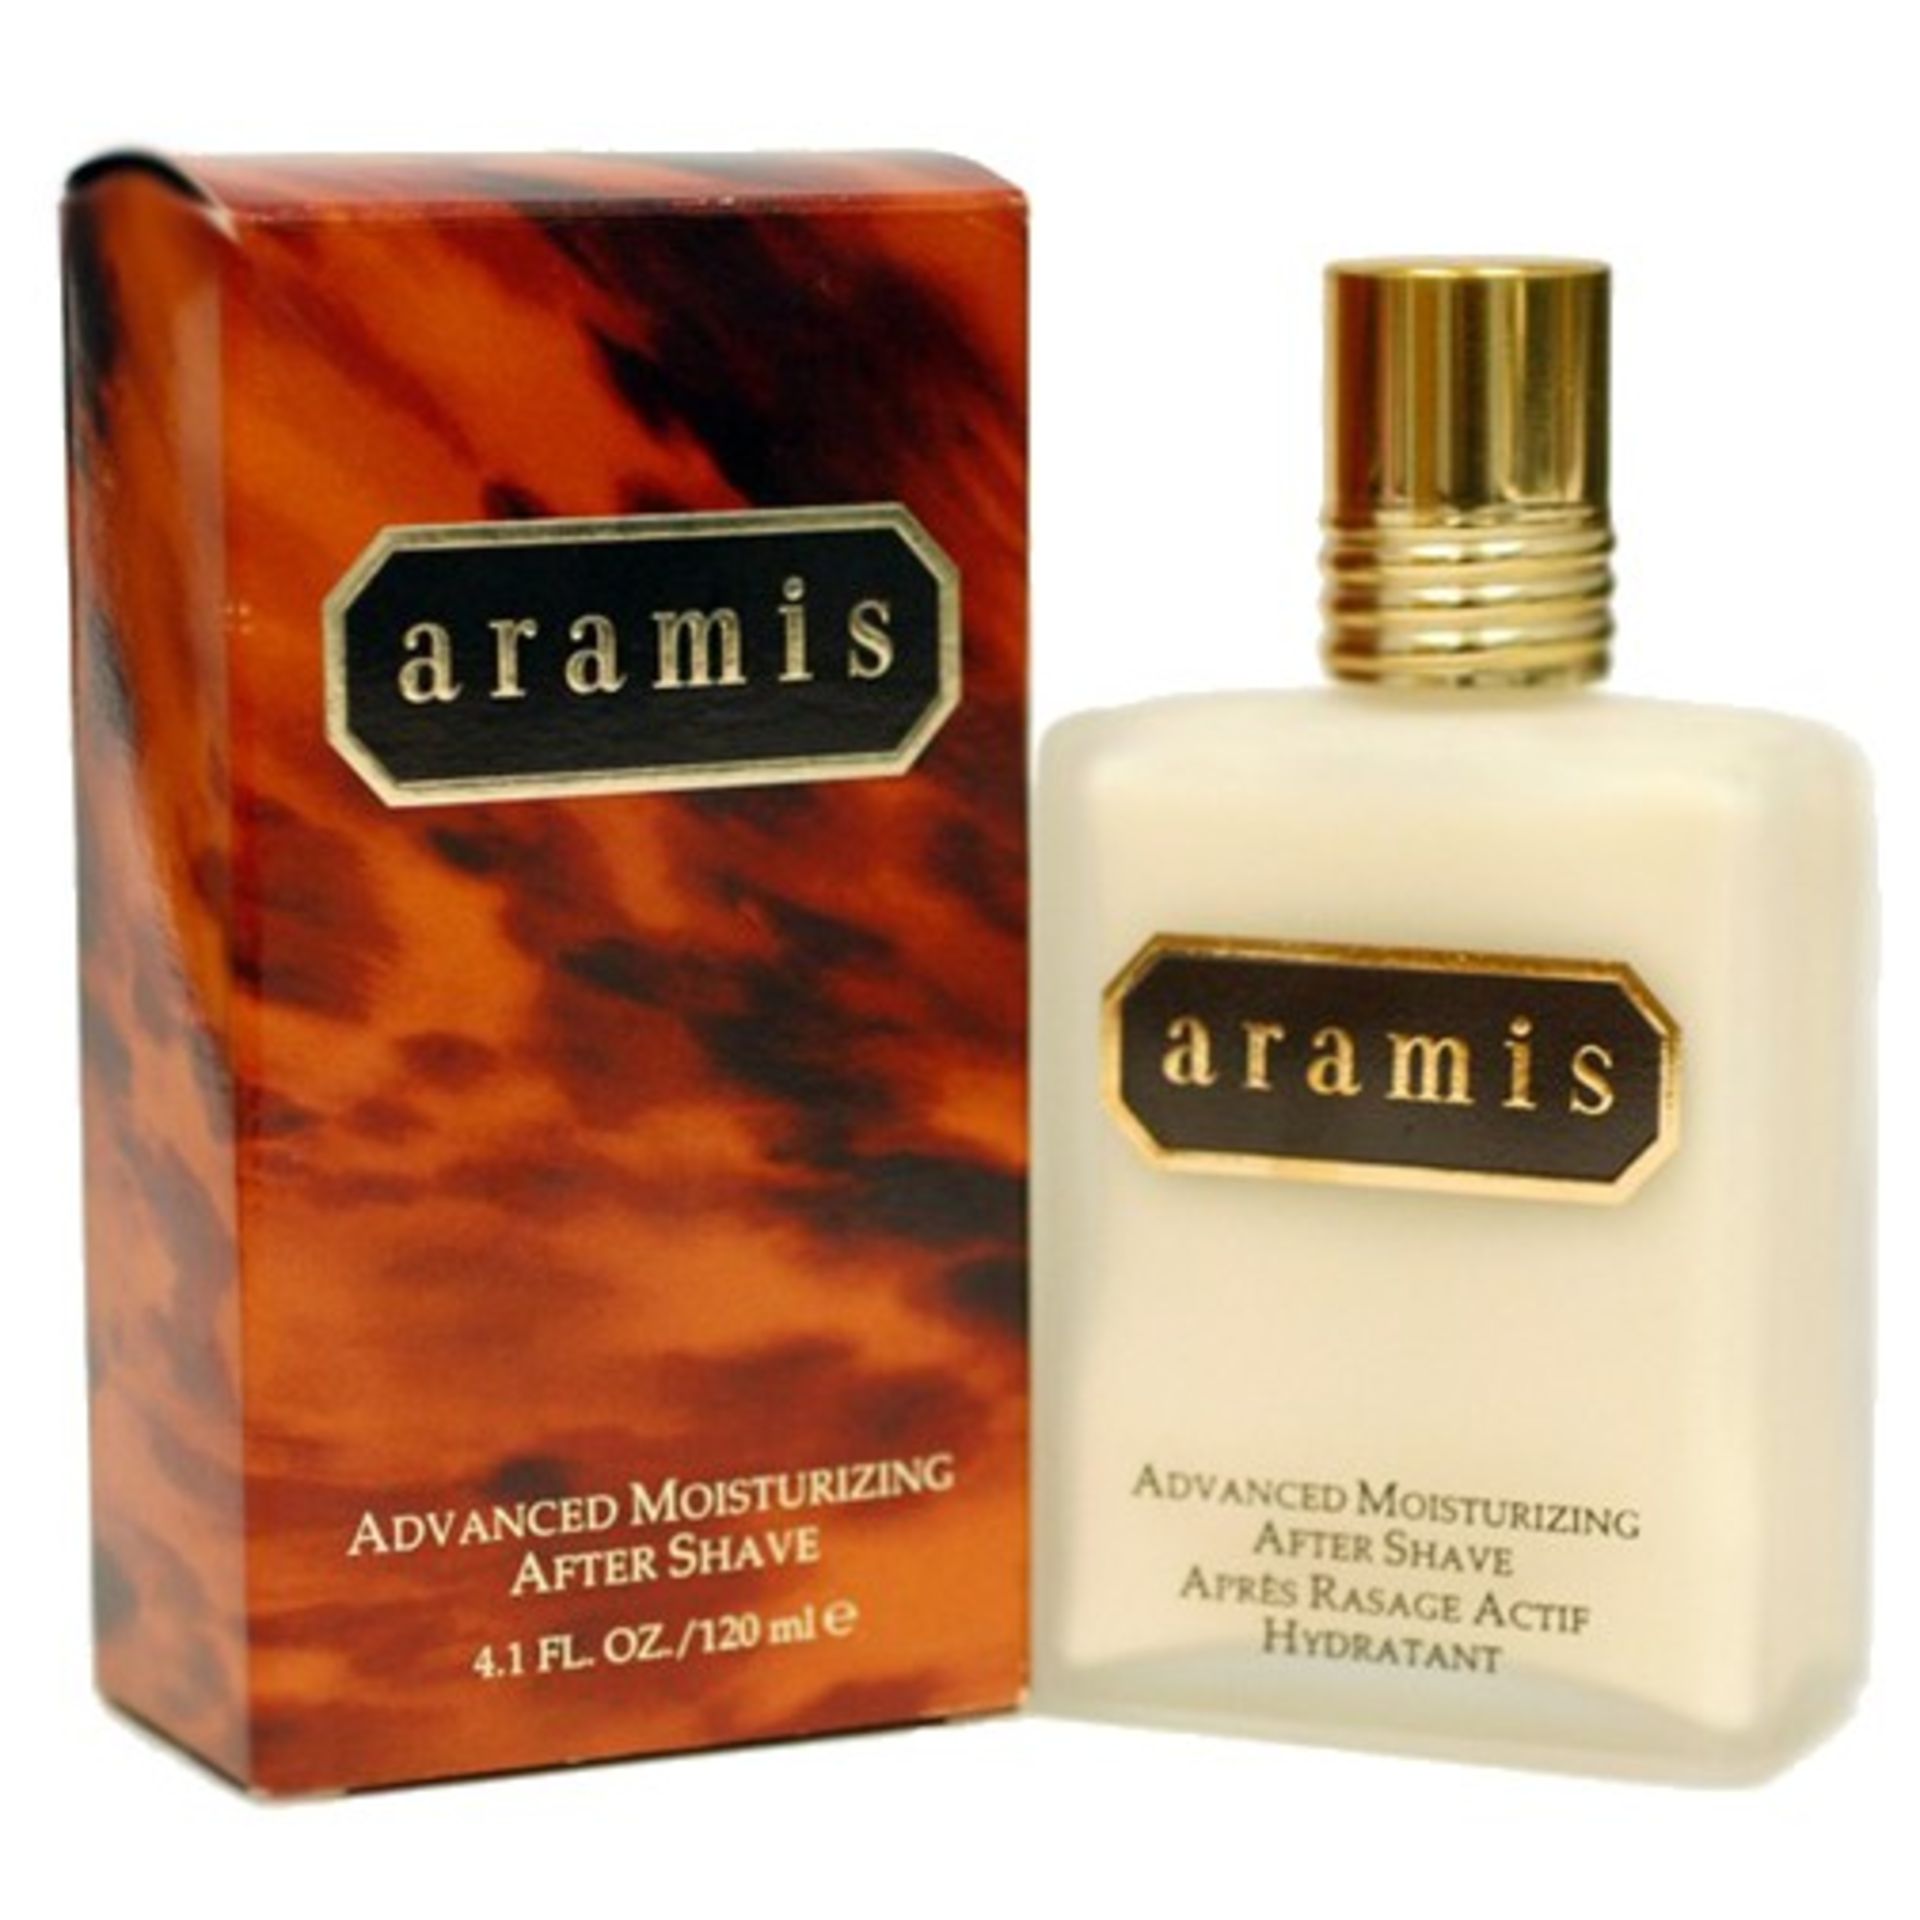 V *TRADE QTY* Brand New Aramis Advanced Moisturising After Shave Balm eBay Price £38.20 X 3 YOUR BID